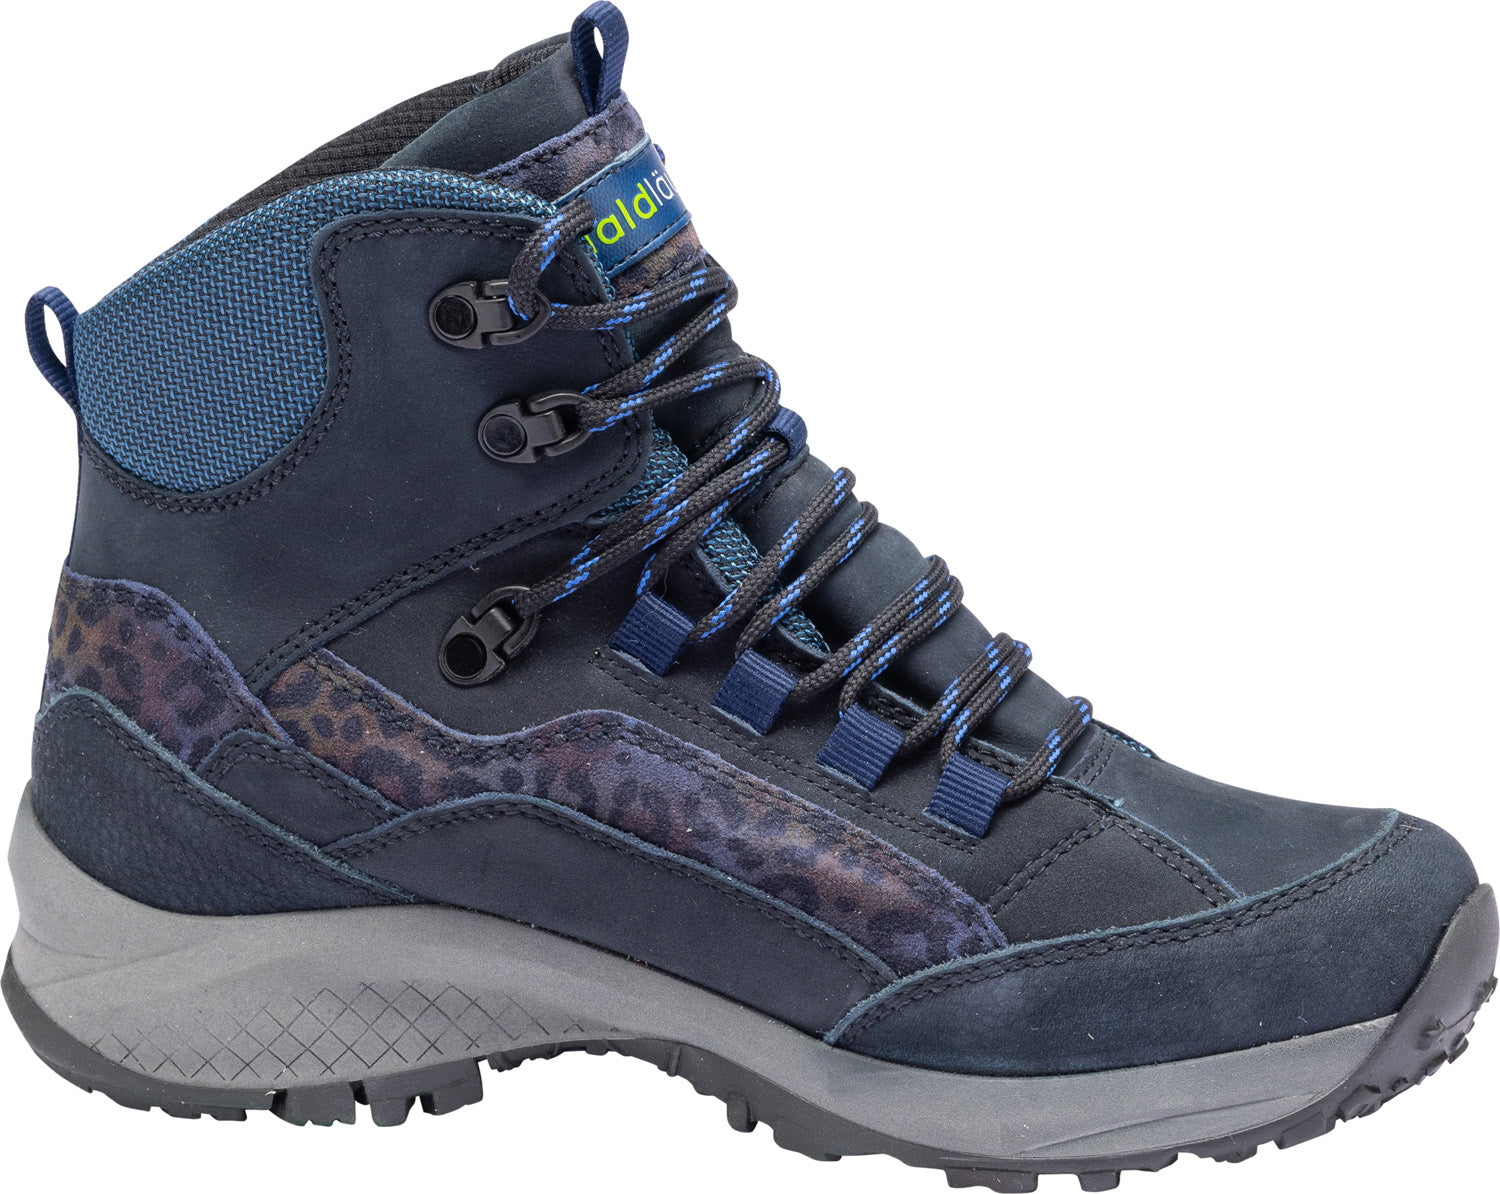 Waldlaufer 949977 402 194 H-Emma Ladies Navy Blue Nubuck Waterproof Lace Up Ankle Boots